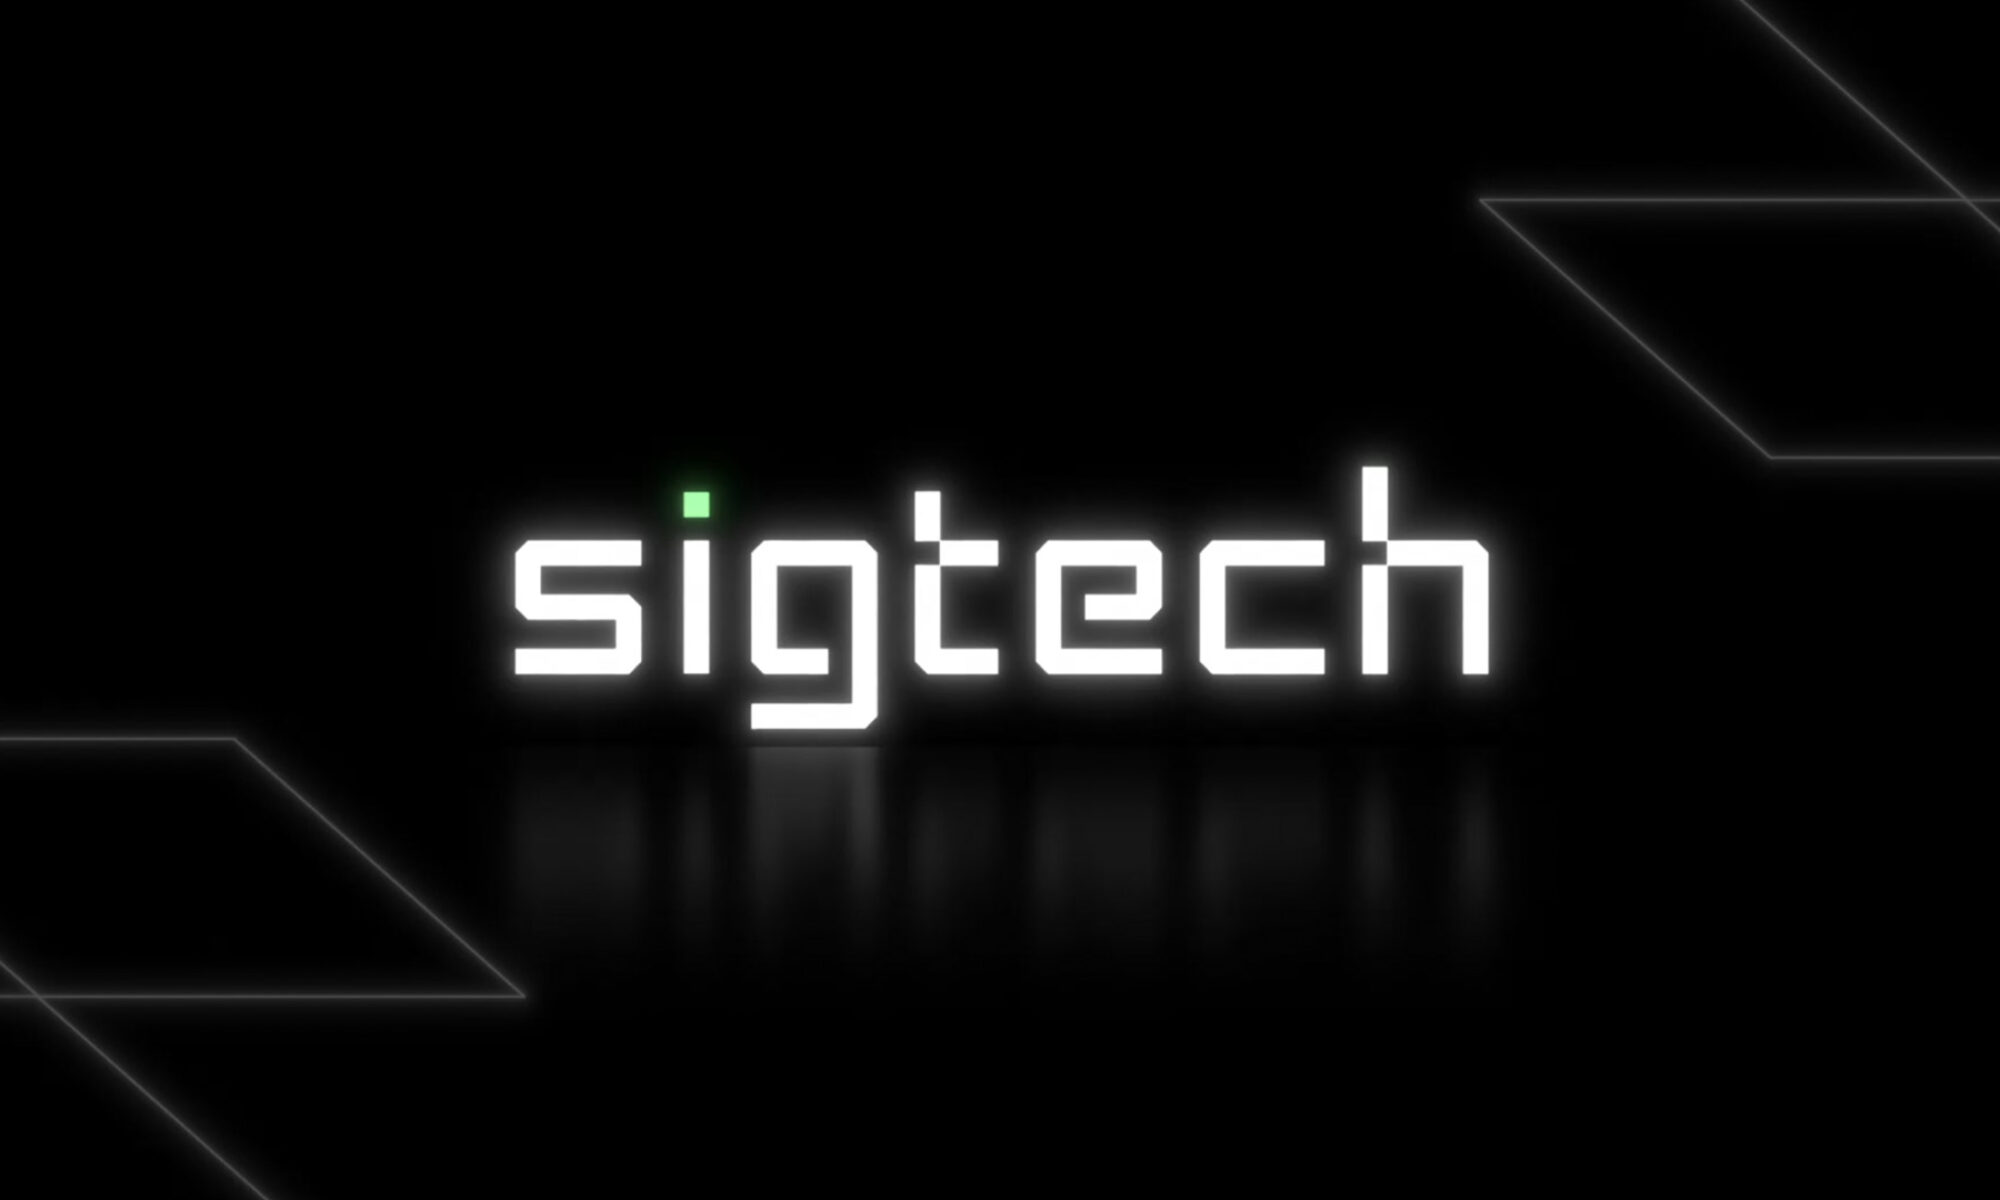 SigTech Video opener image